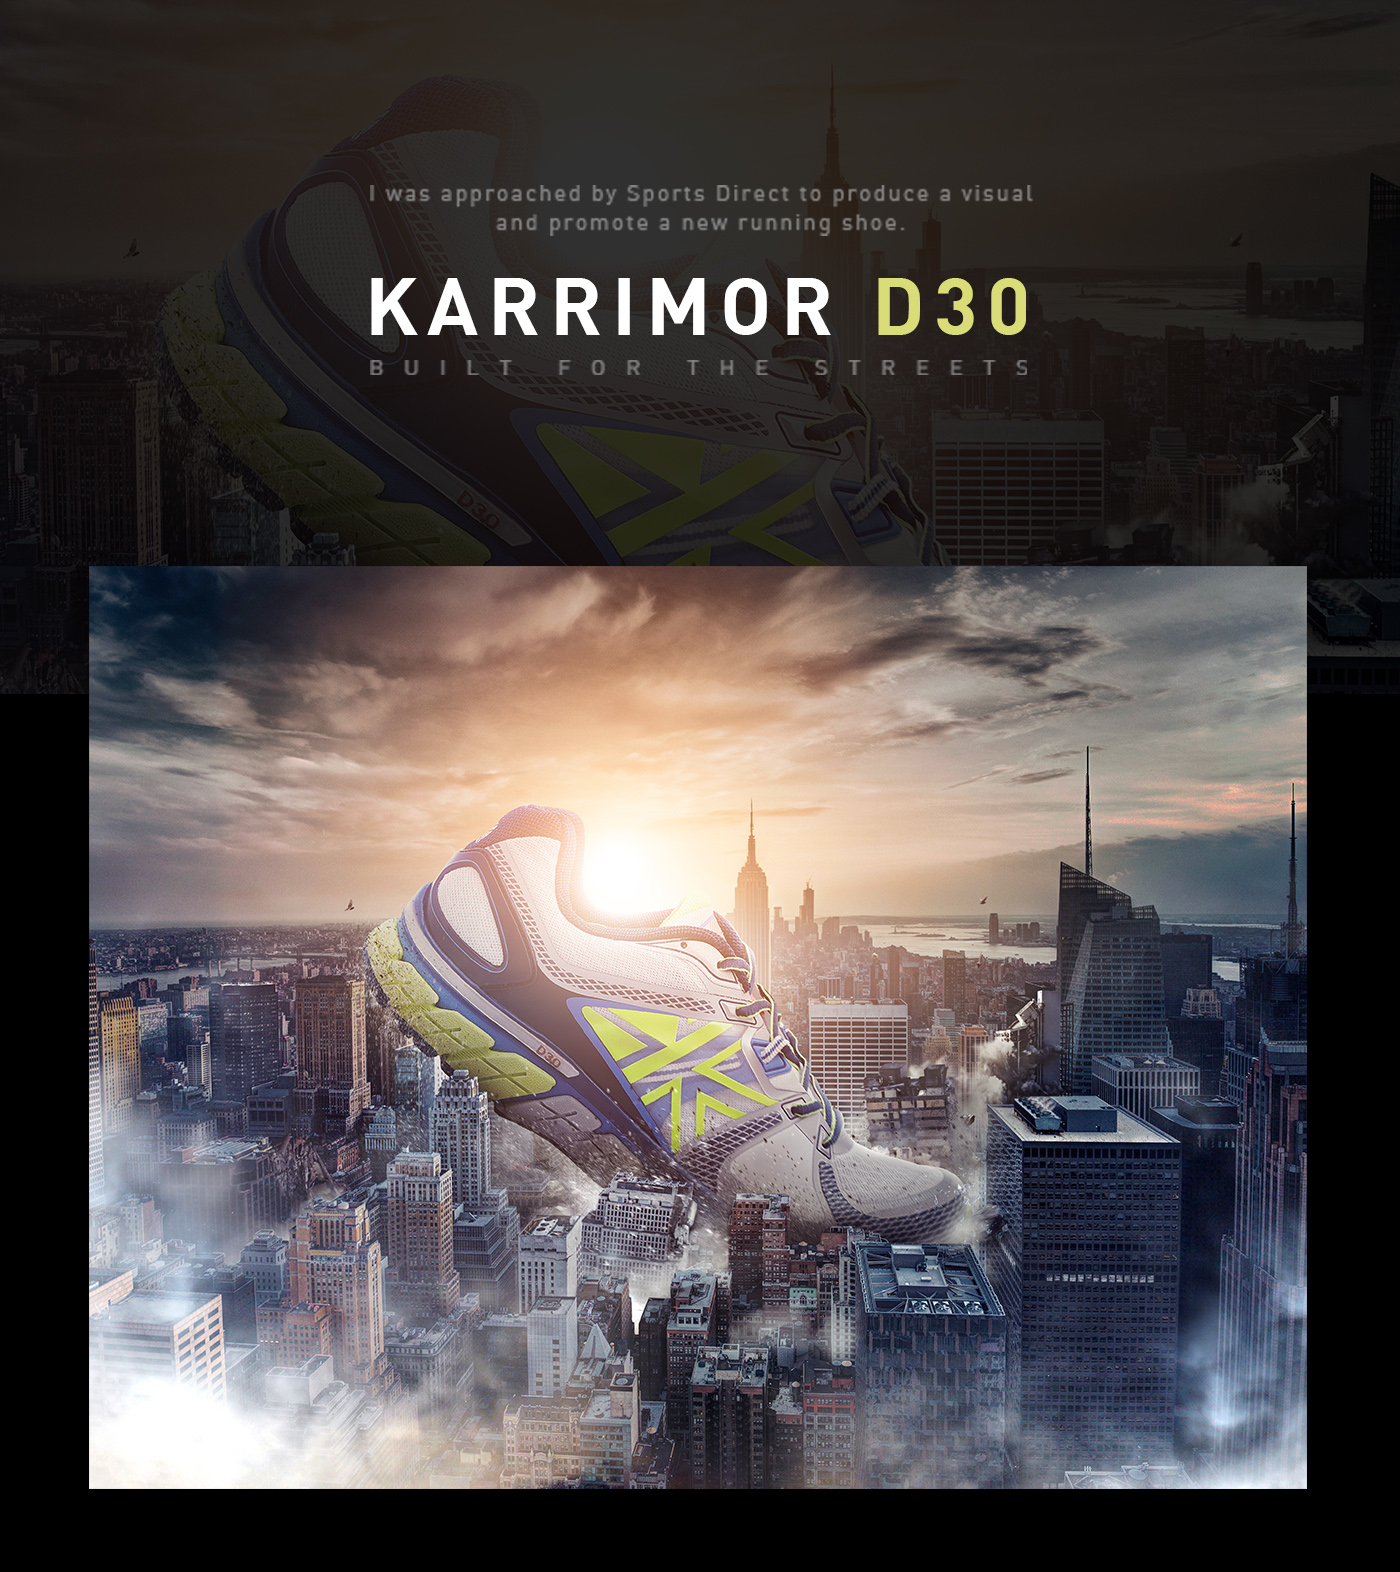 shoe trainer Karrimor photo city advert SKY epic flare cloud cityscape smash run running sport